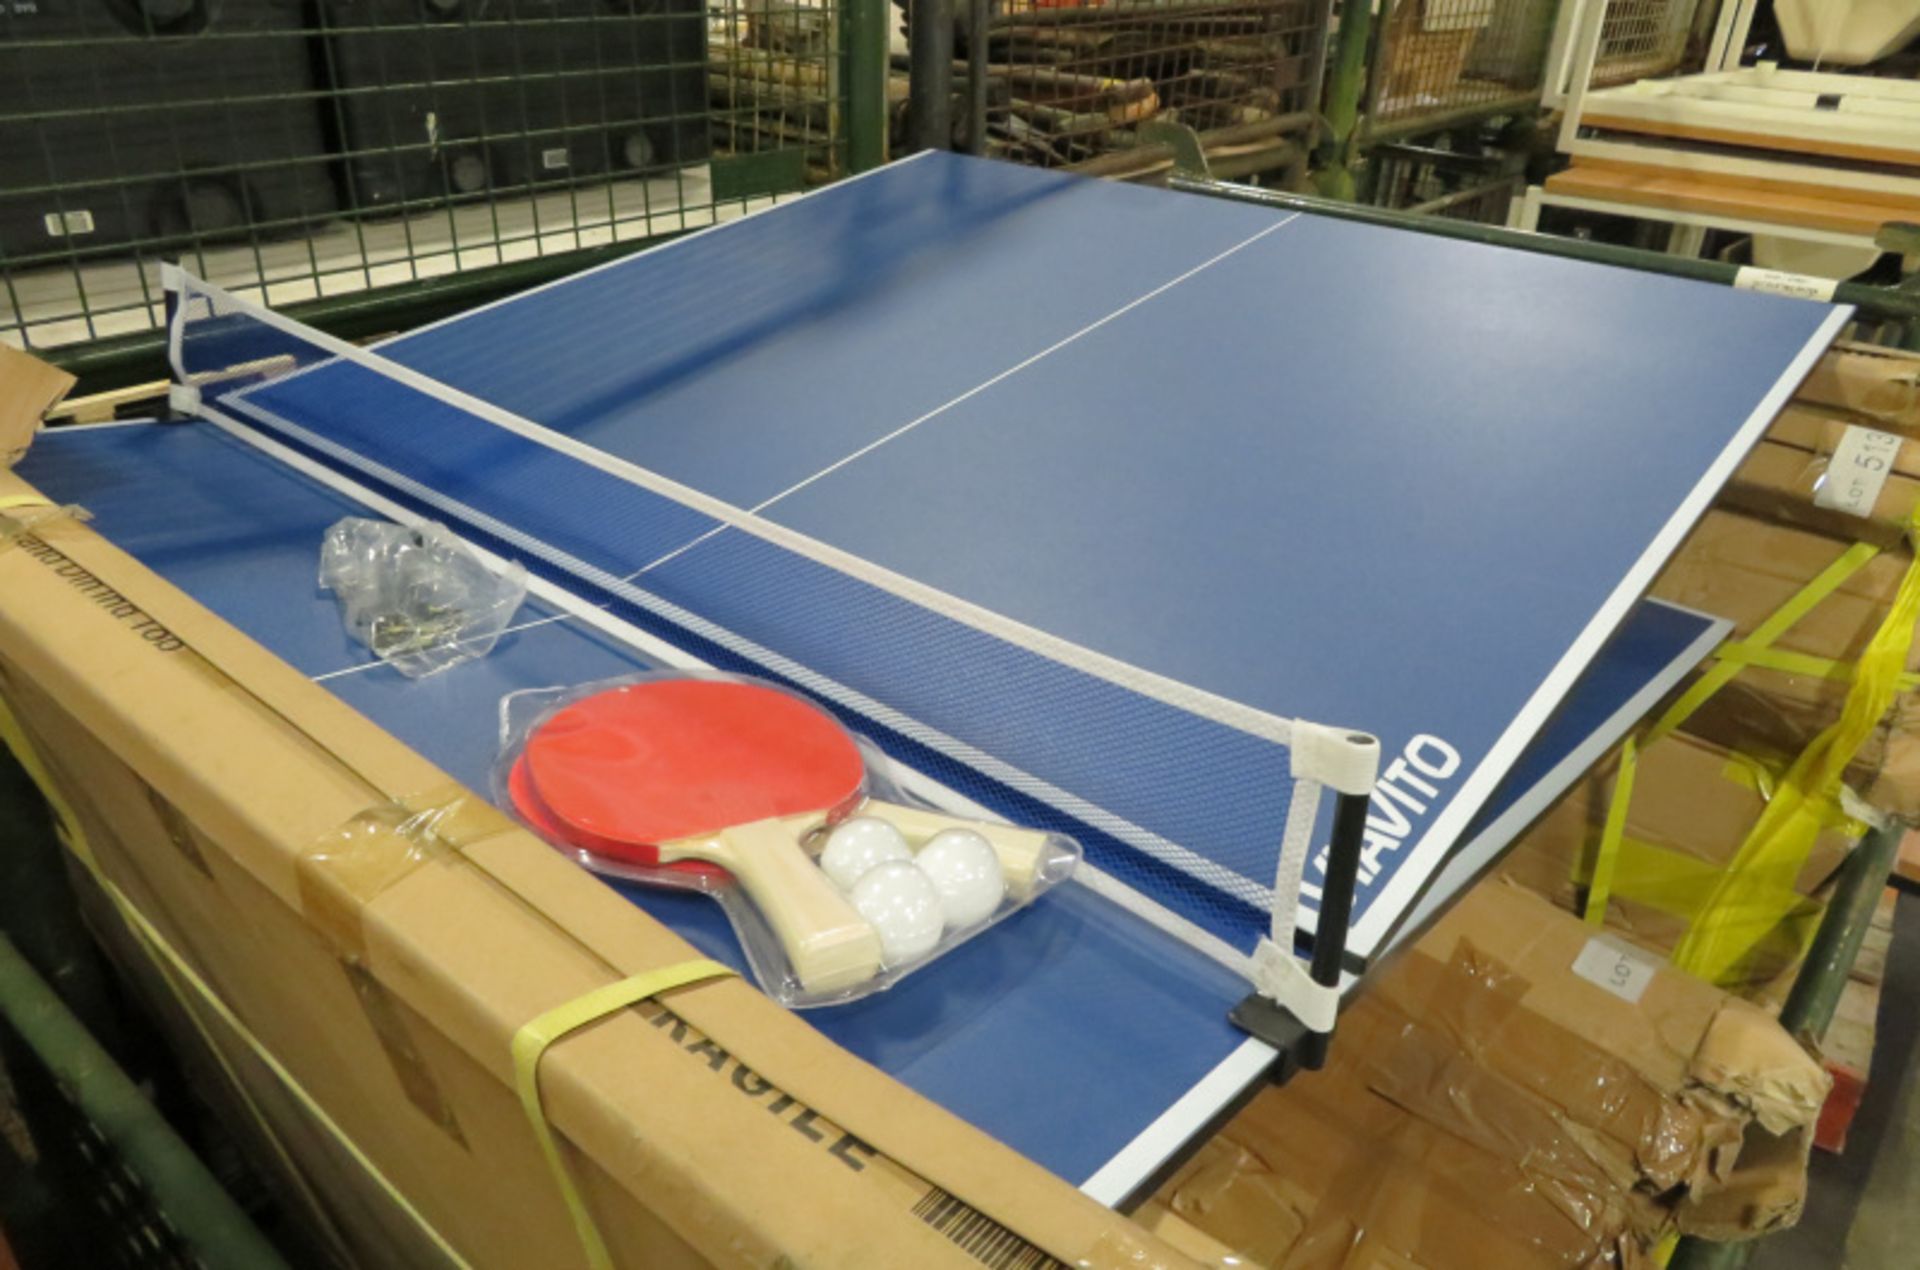 Viavito Flipit table tennis top - Image 5 of 6